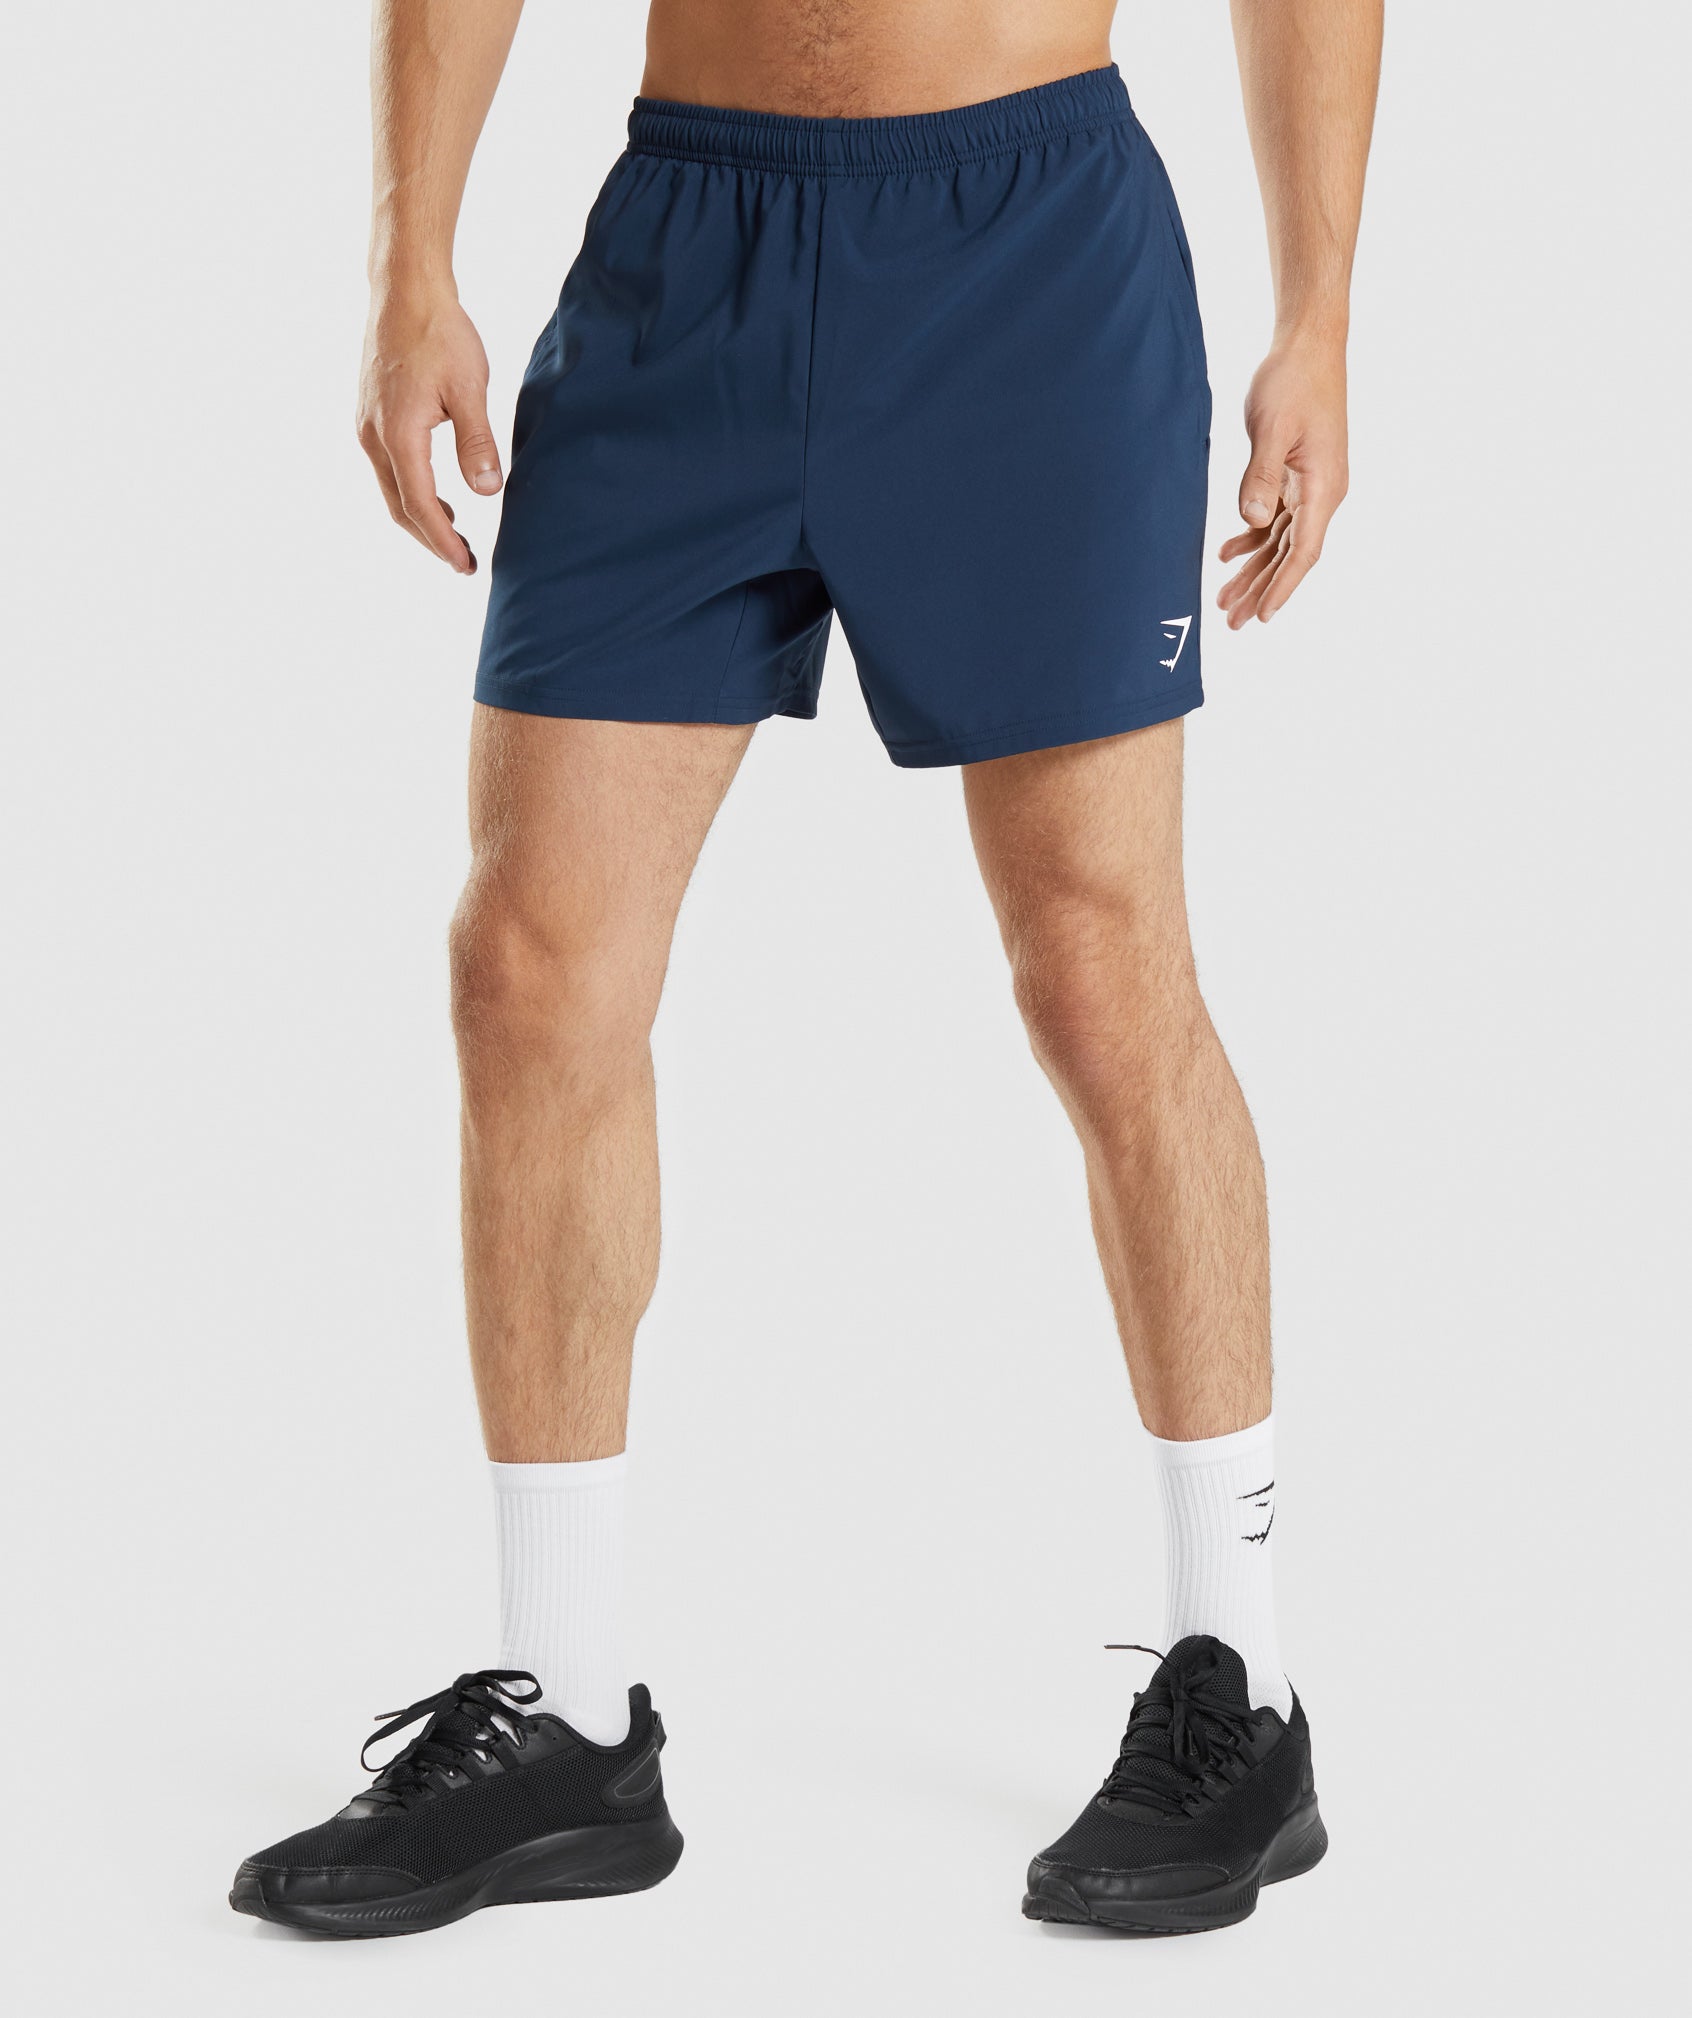 adviicd Mens Shorts 5 inch Inseam Men's Regular Fit Shorts Mens Work Shorts